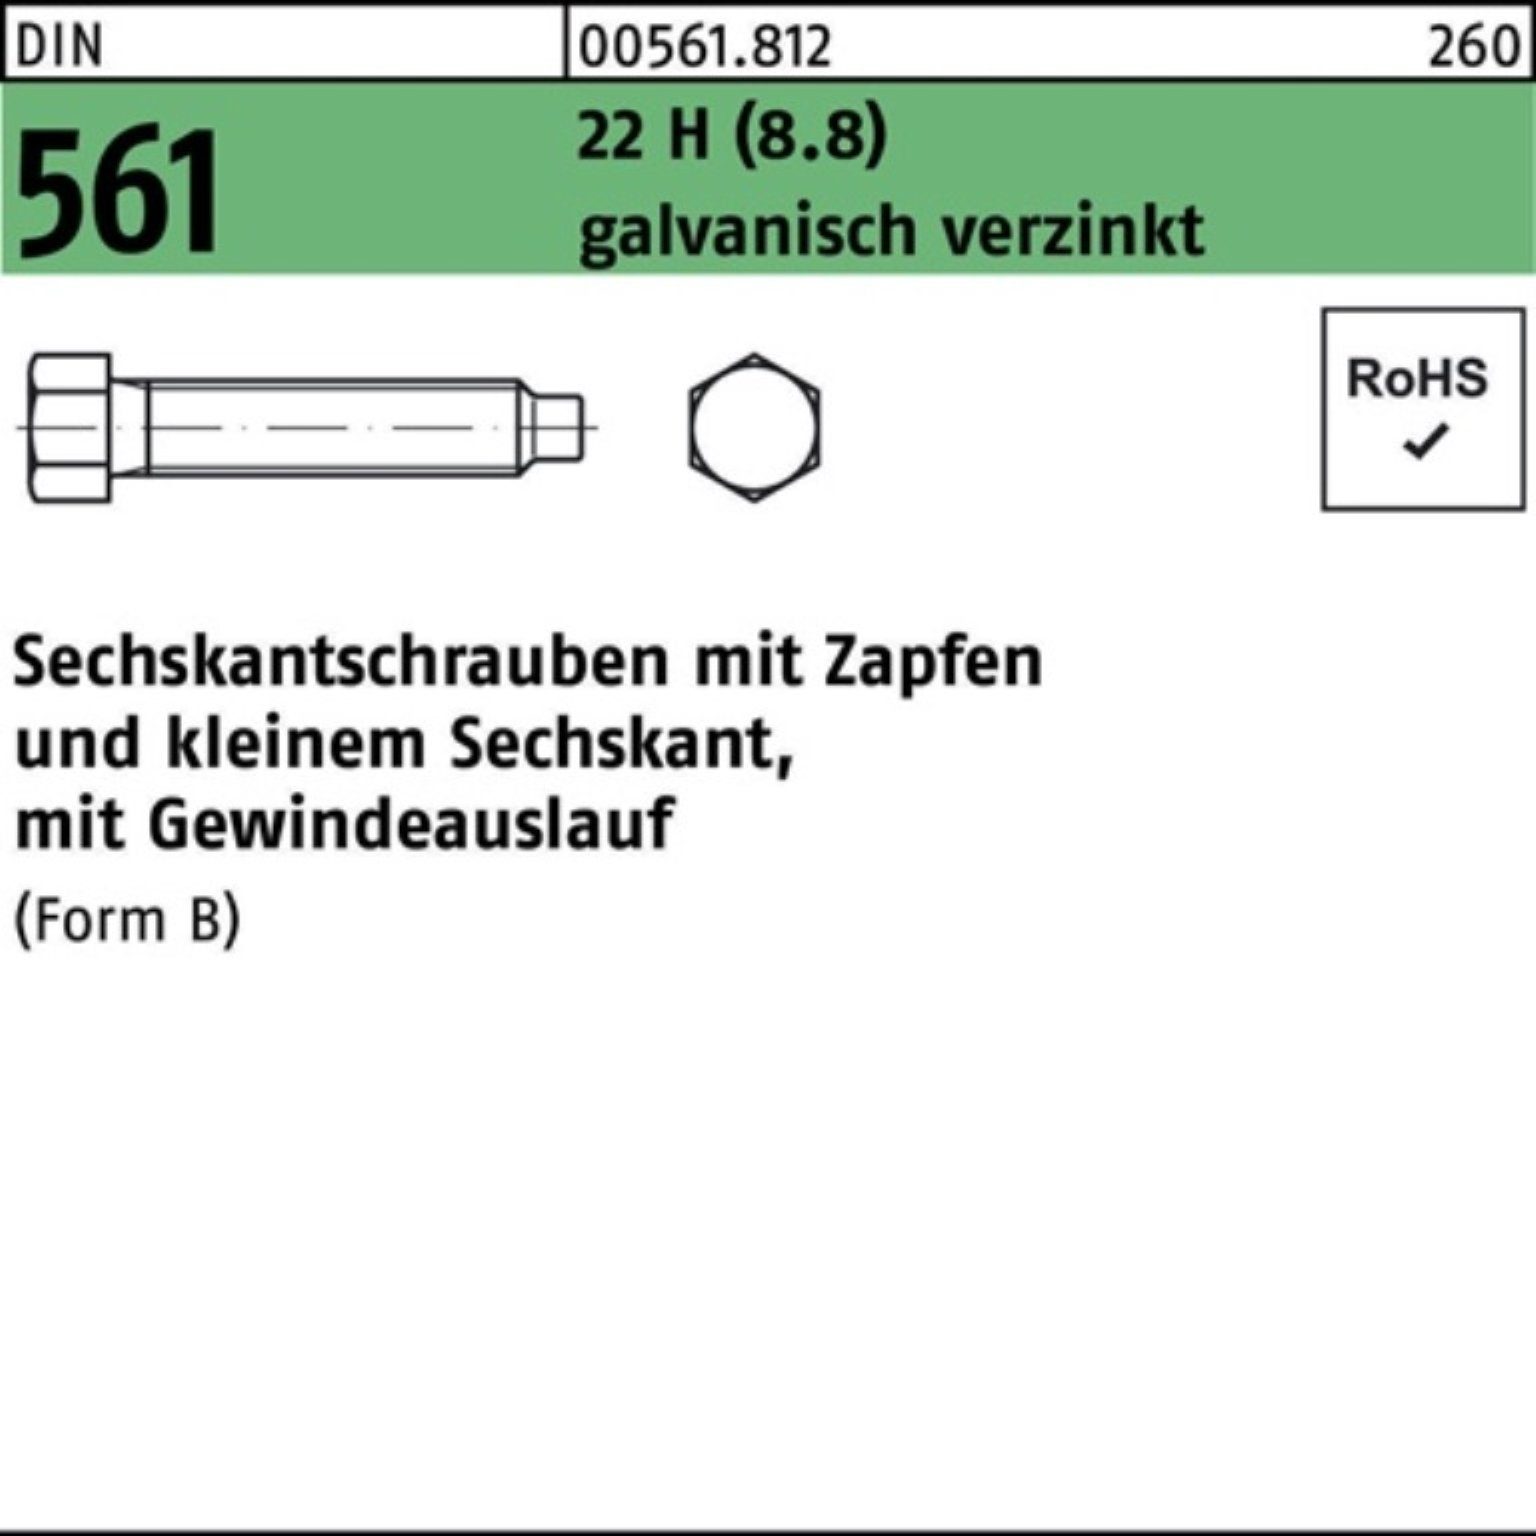 Reyher Sechskantschraube 100er Pack Sechskantschraube Zapfen H 22 (8.8) galv.v 561 DIN BM 16x40